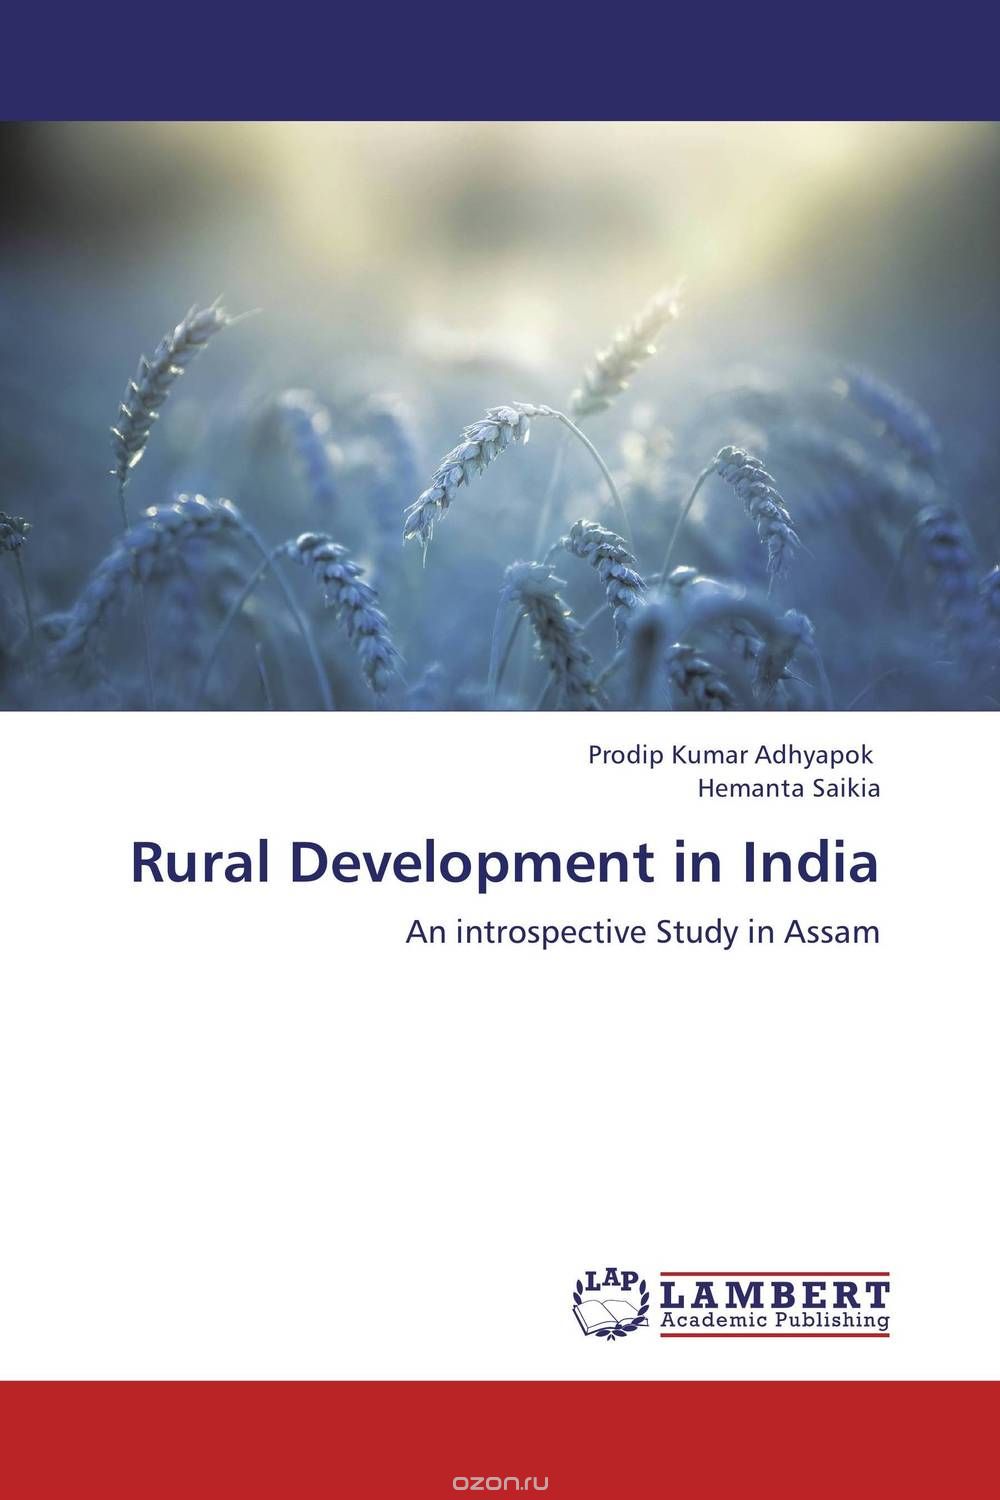 Скачать книгу "Rural Development in India"